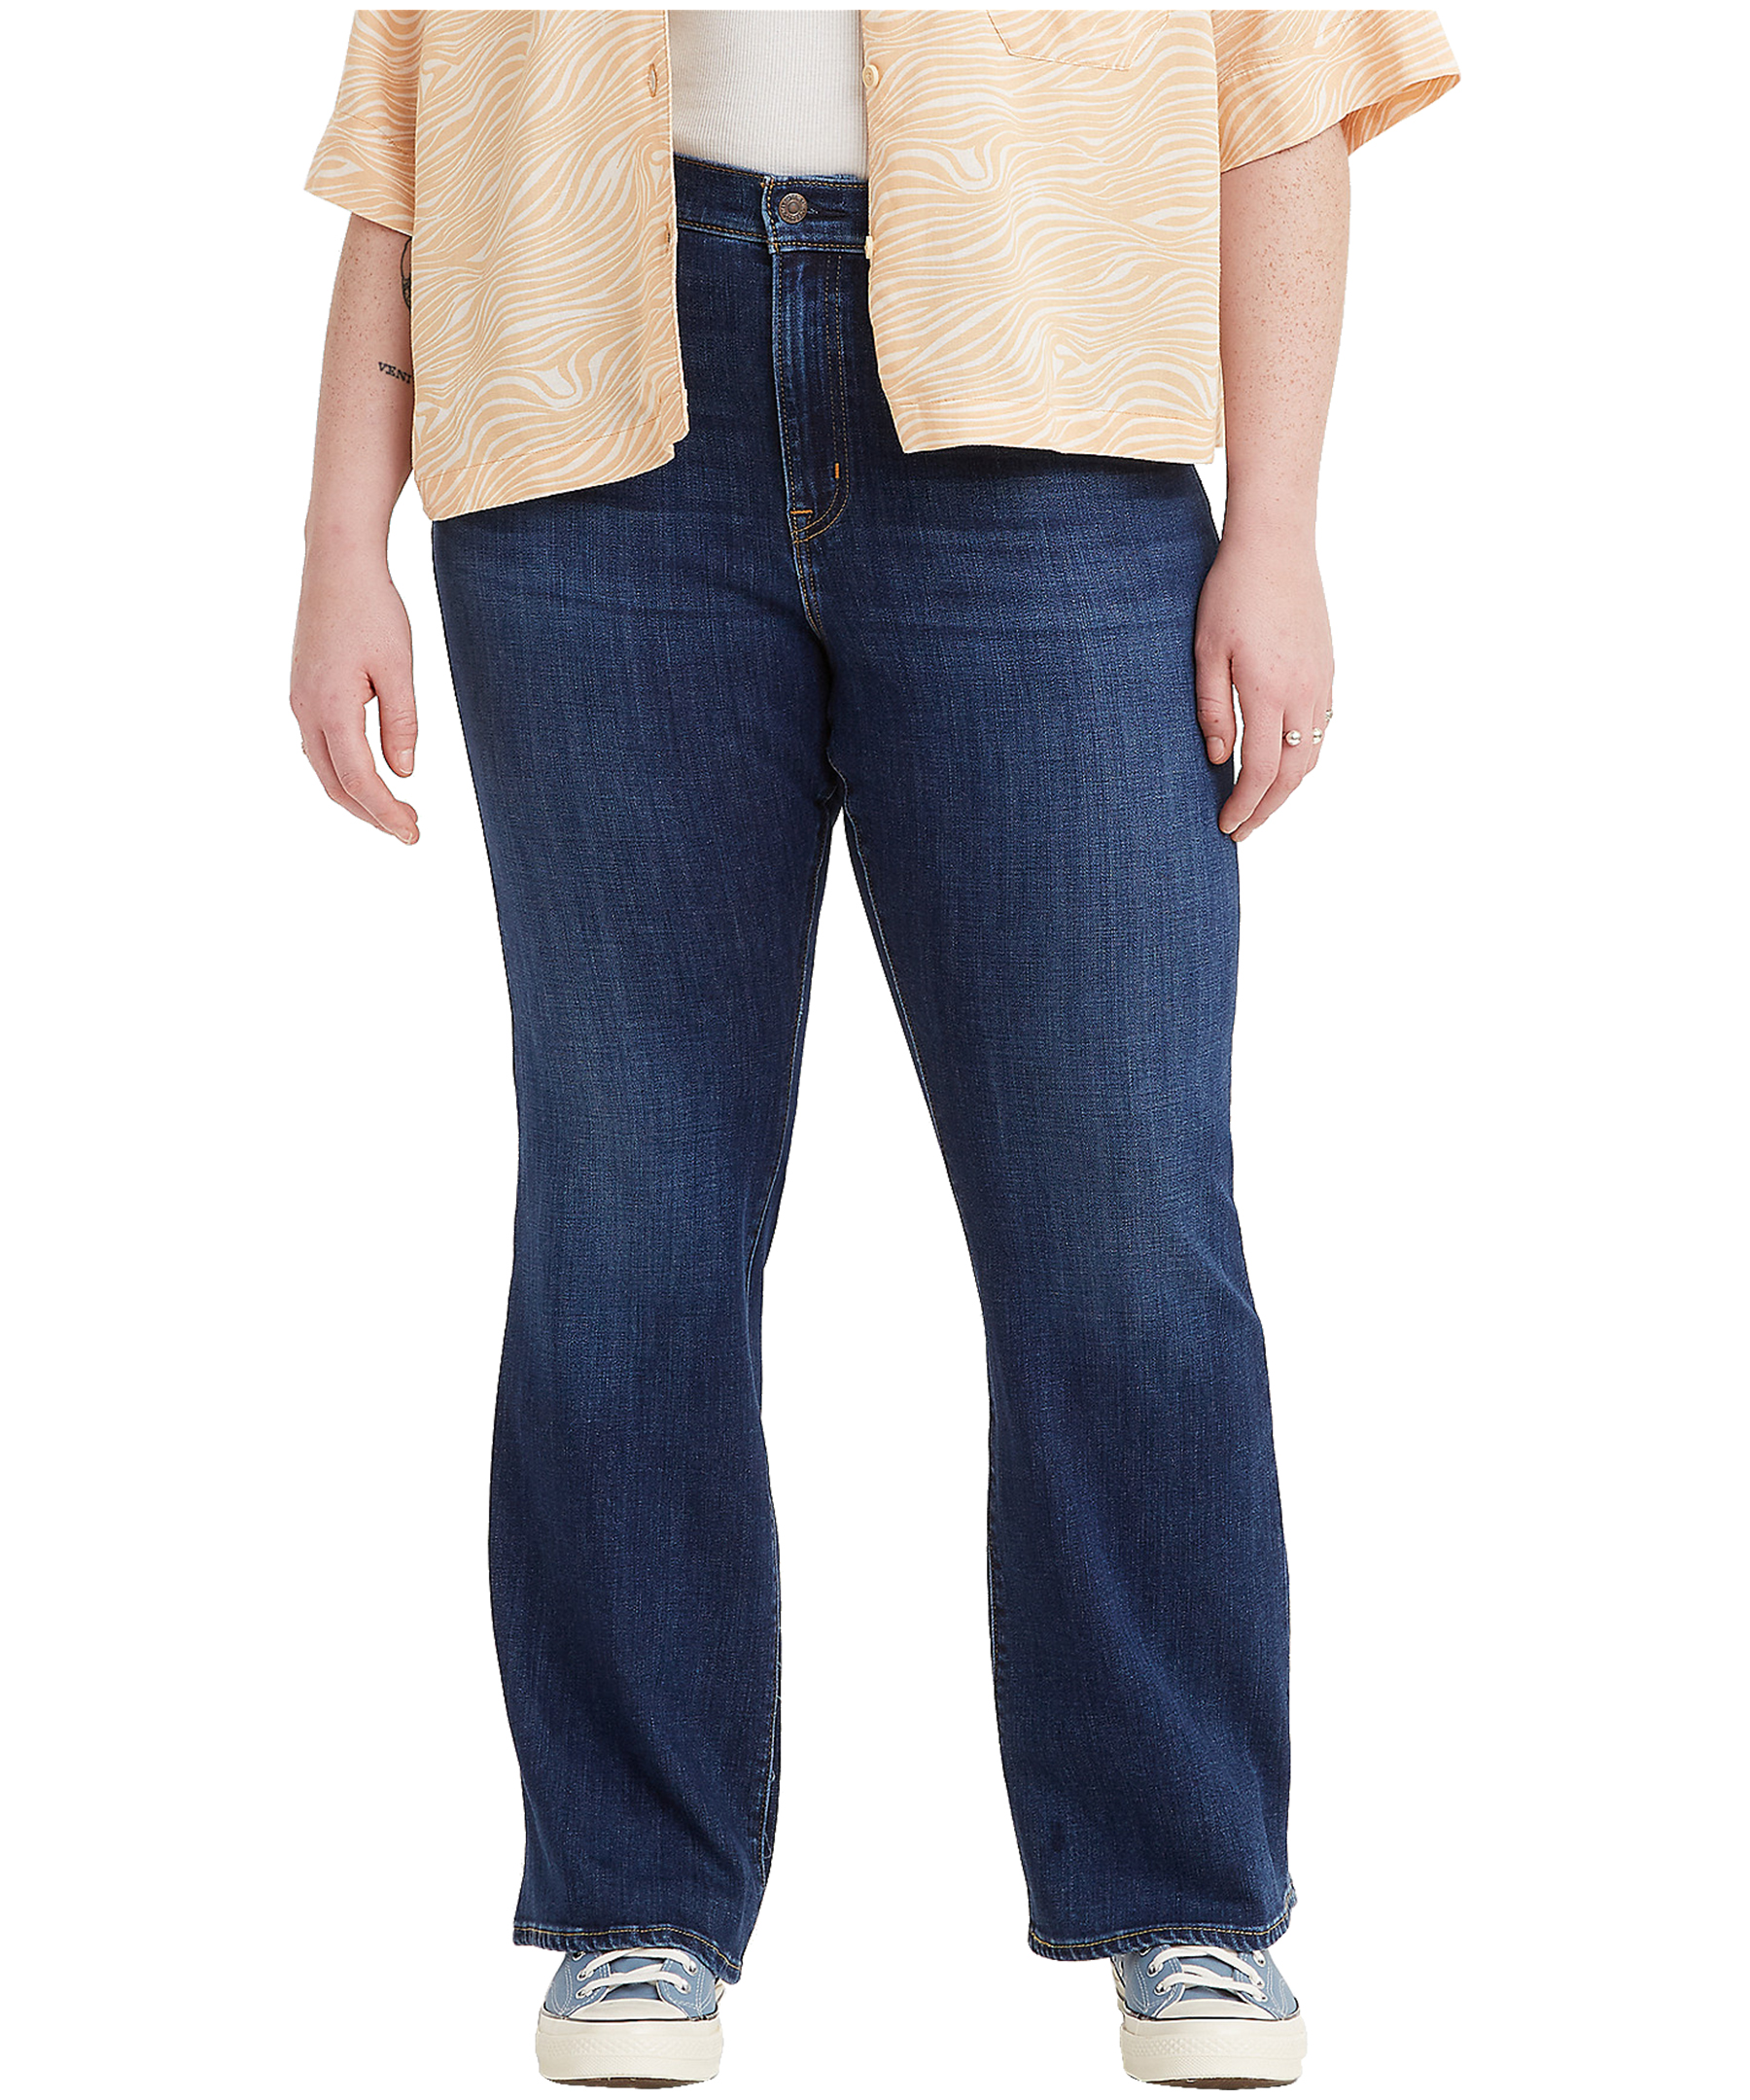 LEVI'S 726 High Rise Flare Womens Jeans - Take A Walk - MEDIUM INDIGO